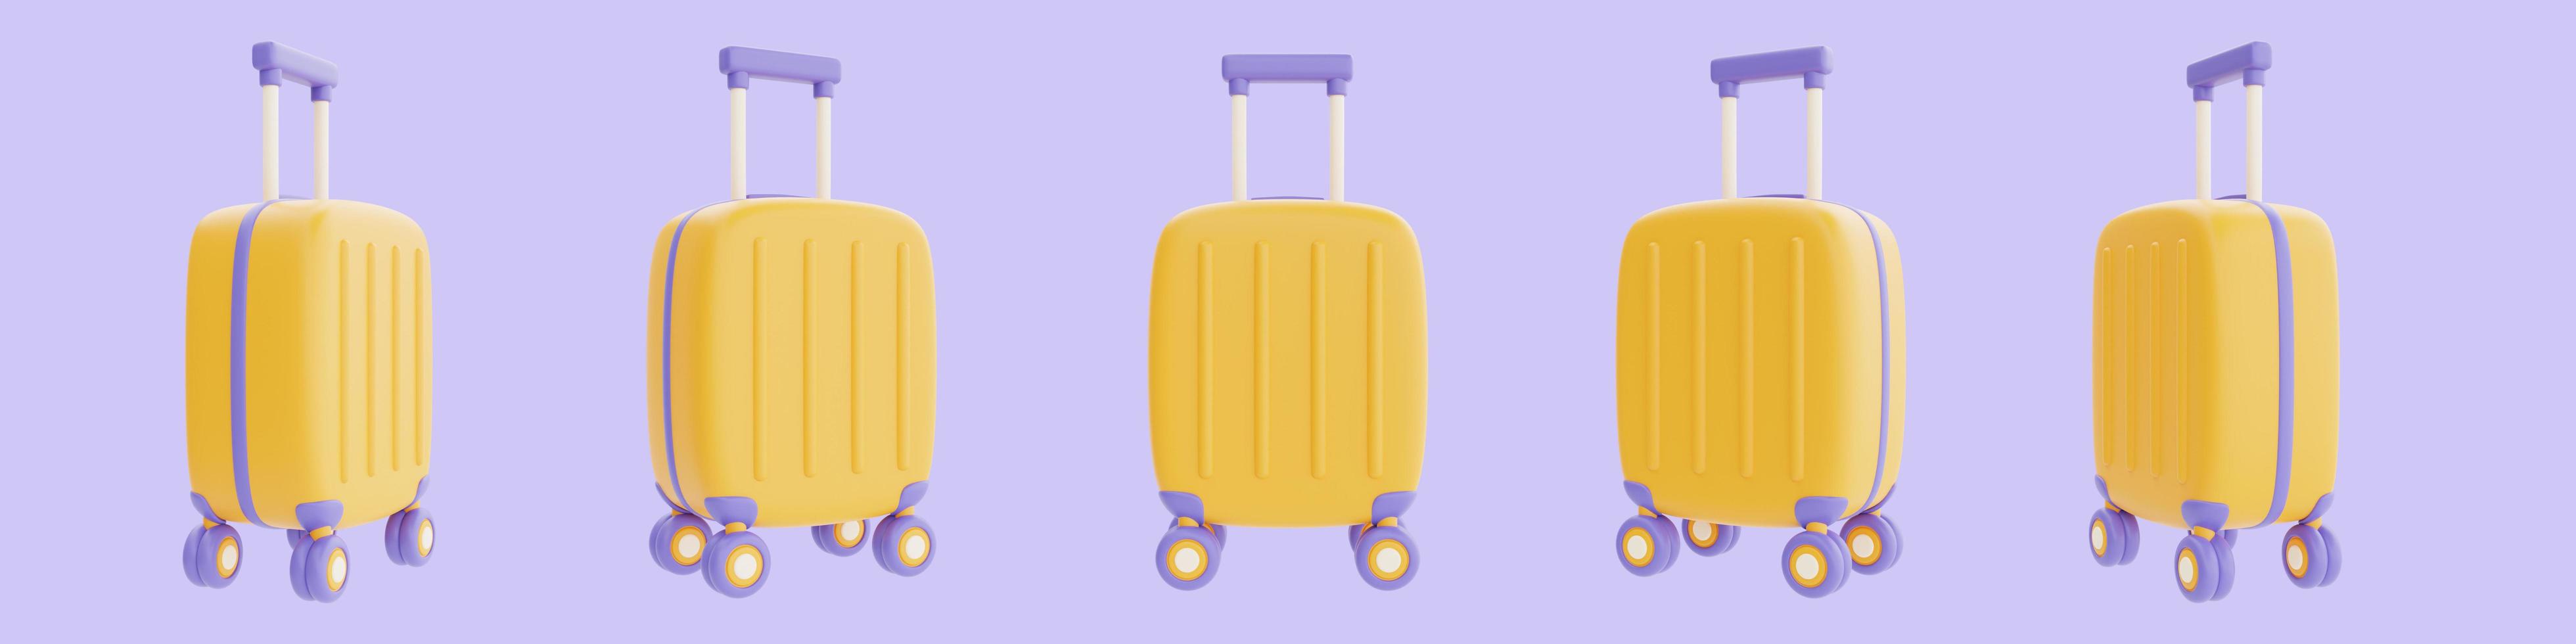 conjunto de maleta amarilla aislada sobre fondo púrpura, turismo y viajes, renderizado 3d foto